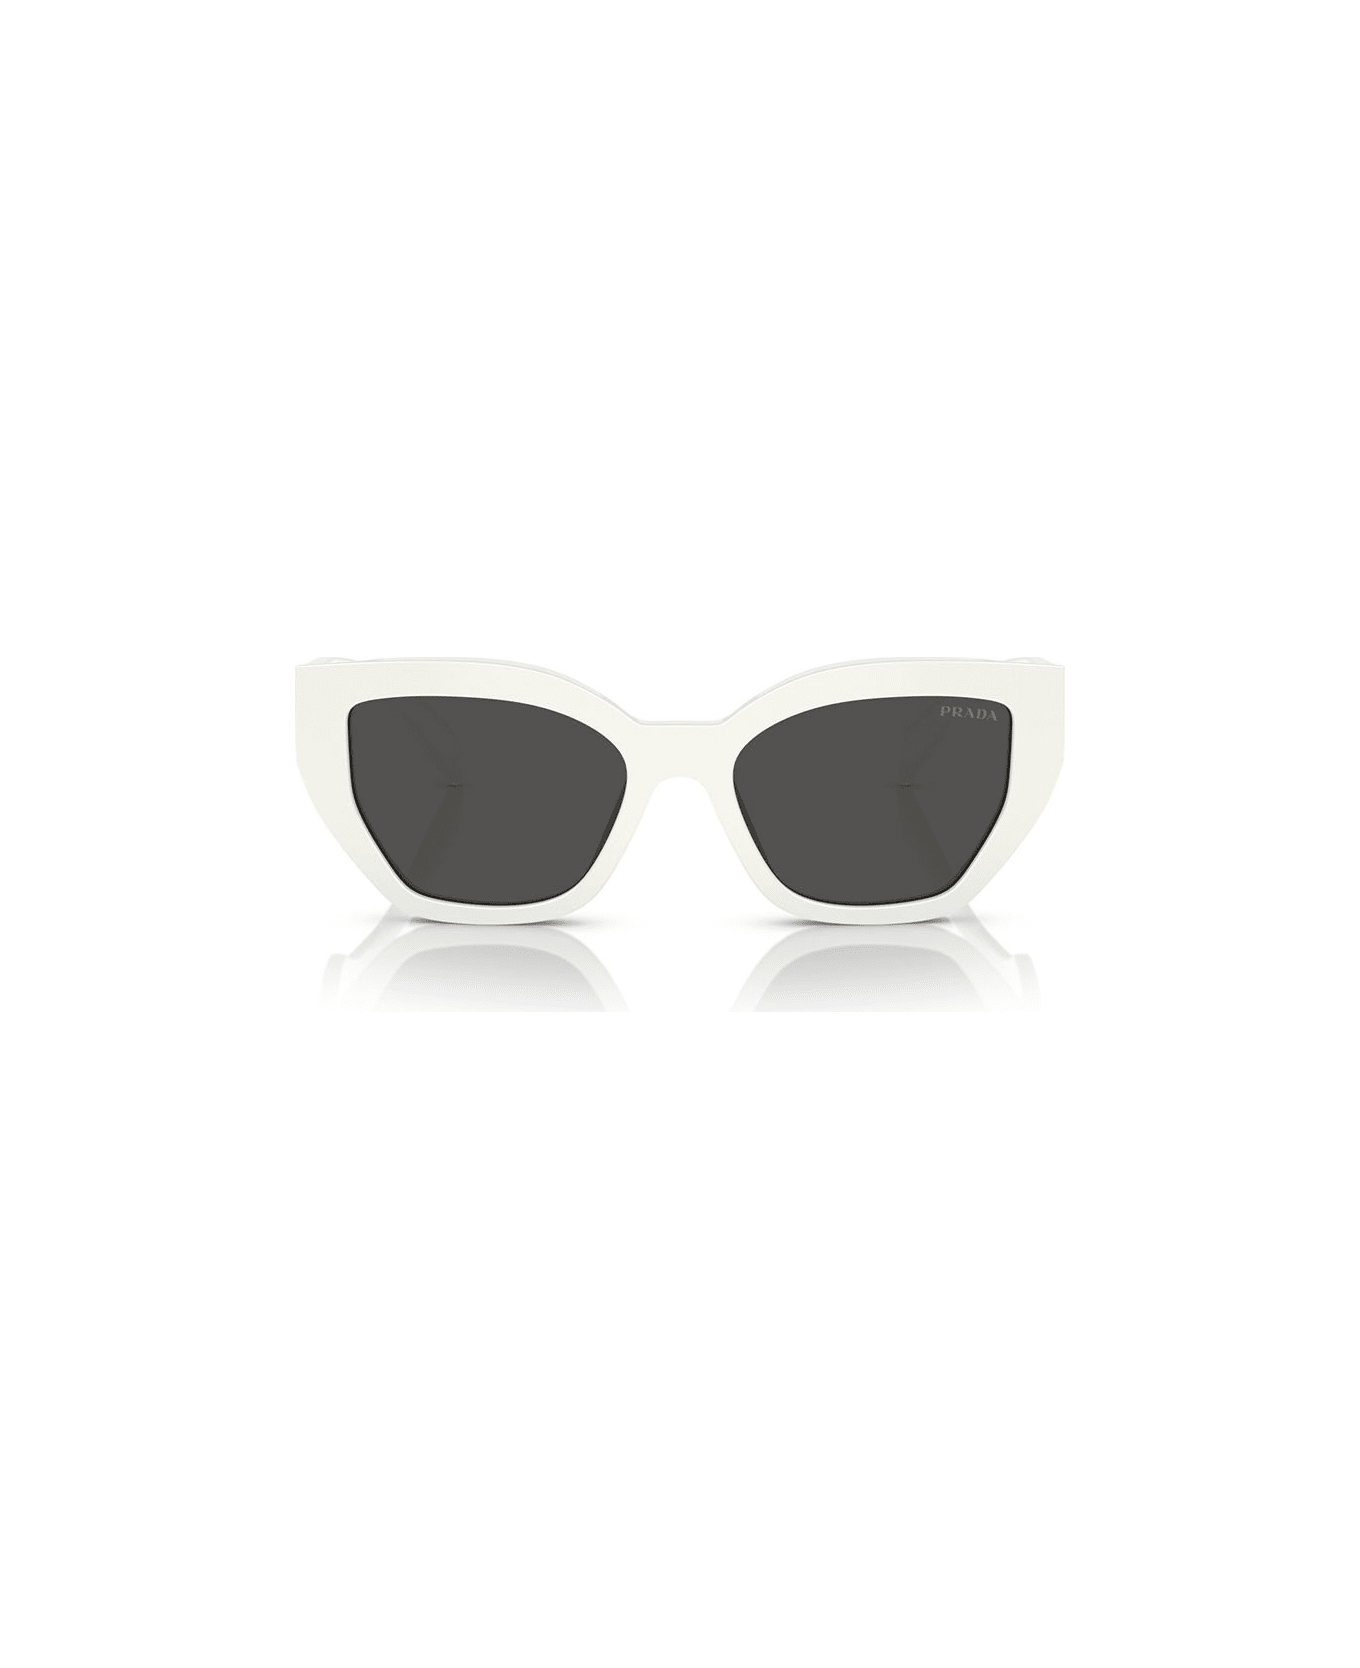 Prada Eyewear Sole Sunglasses - 1425S0